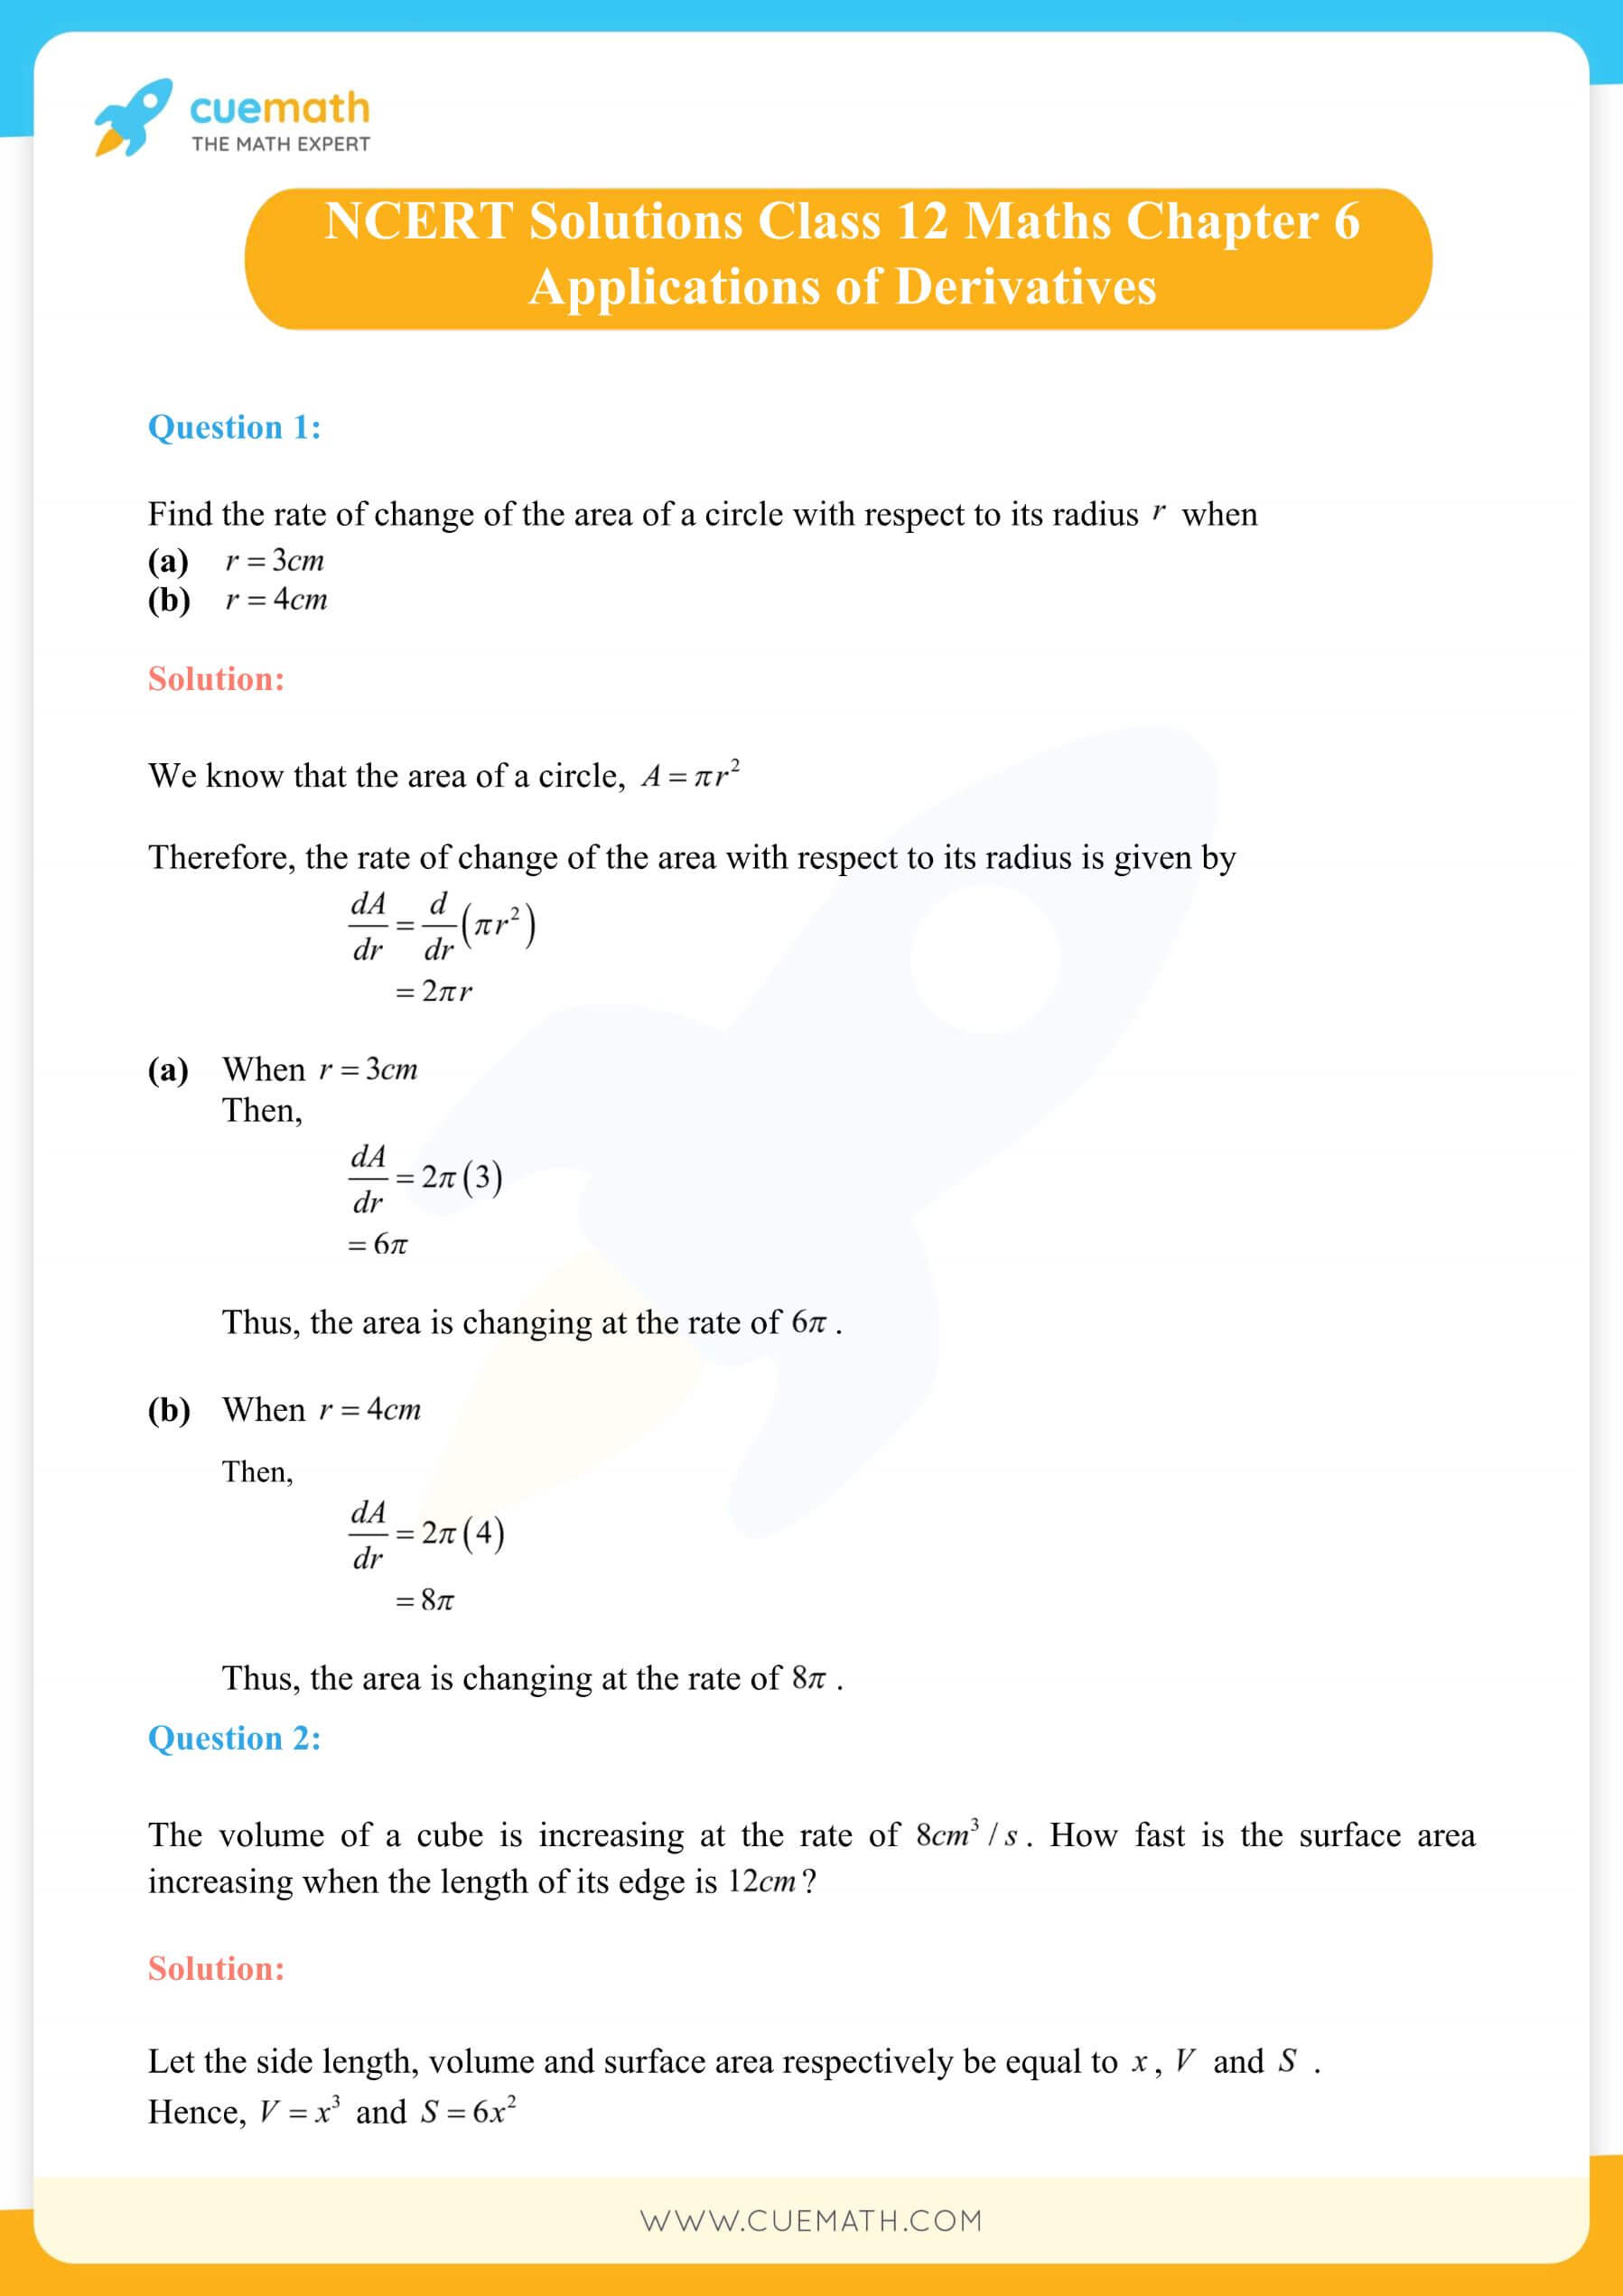 NCERT Solutions Class 12 Maths Chapter 6 Exercise 6.1 1